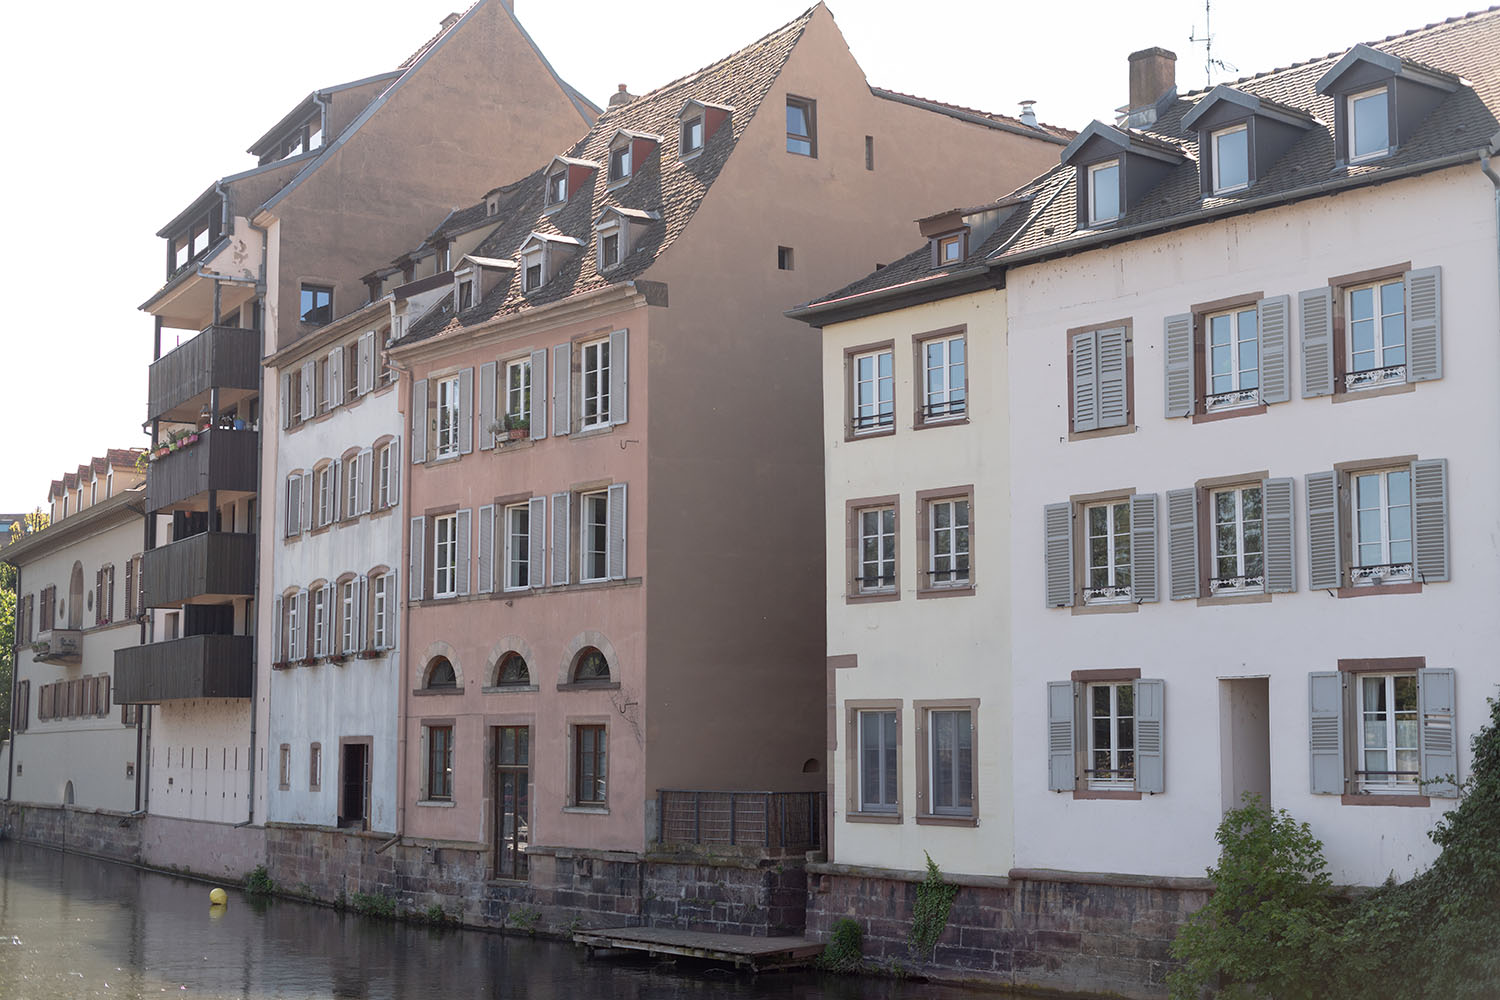 Coco & Vera - Canal-side buildings in La Petite France, Strasbourg